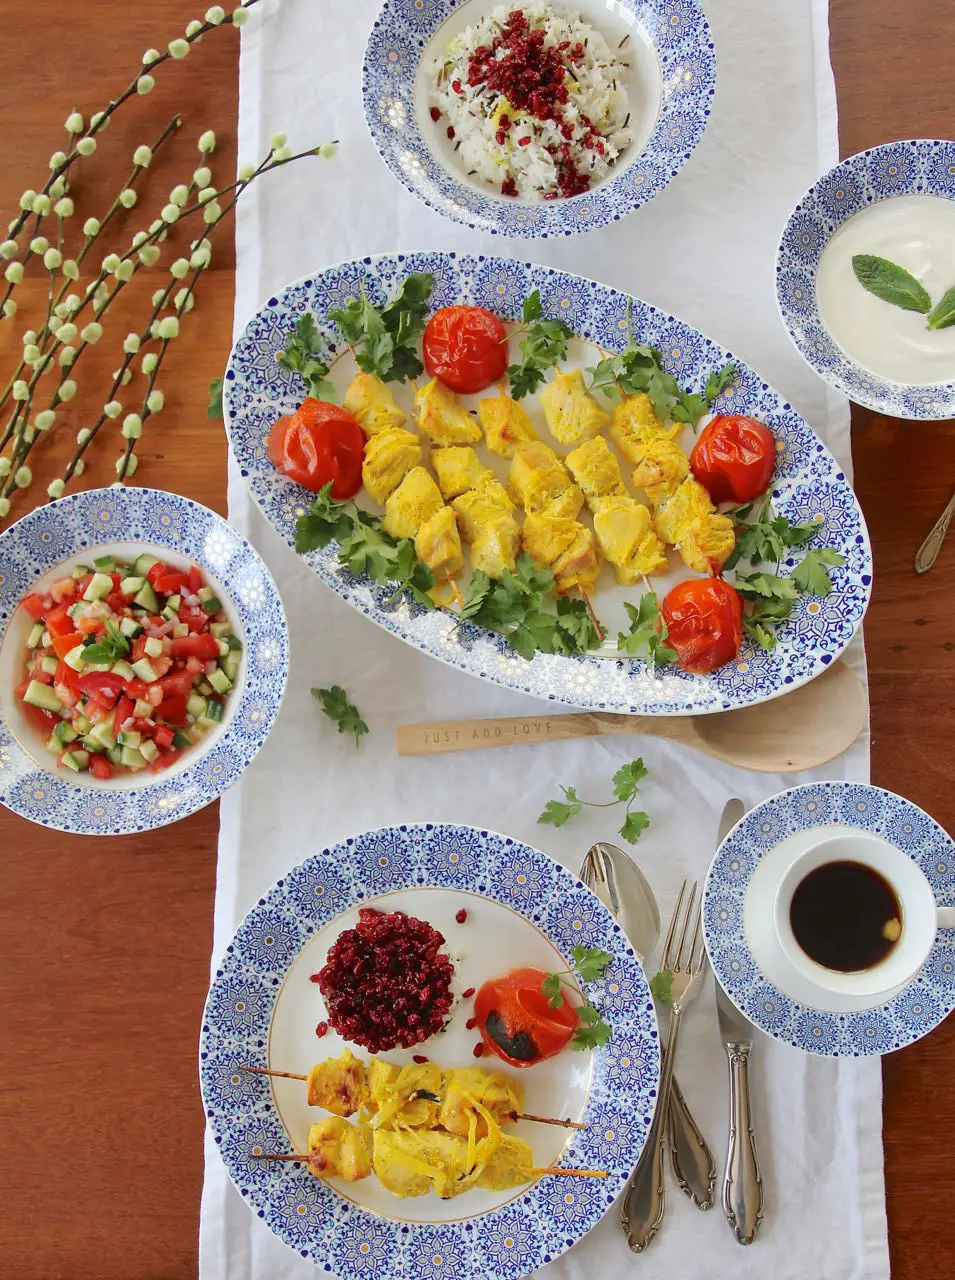 Djudje Kabab für Sizdah be dar - persisches Hühnchen in Safran-Zitronen-Marinade